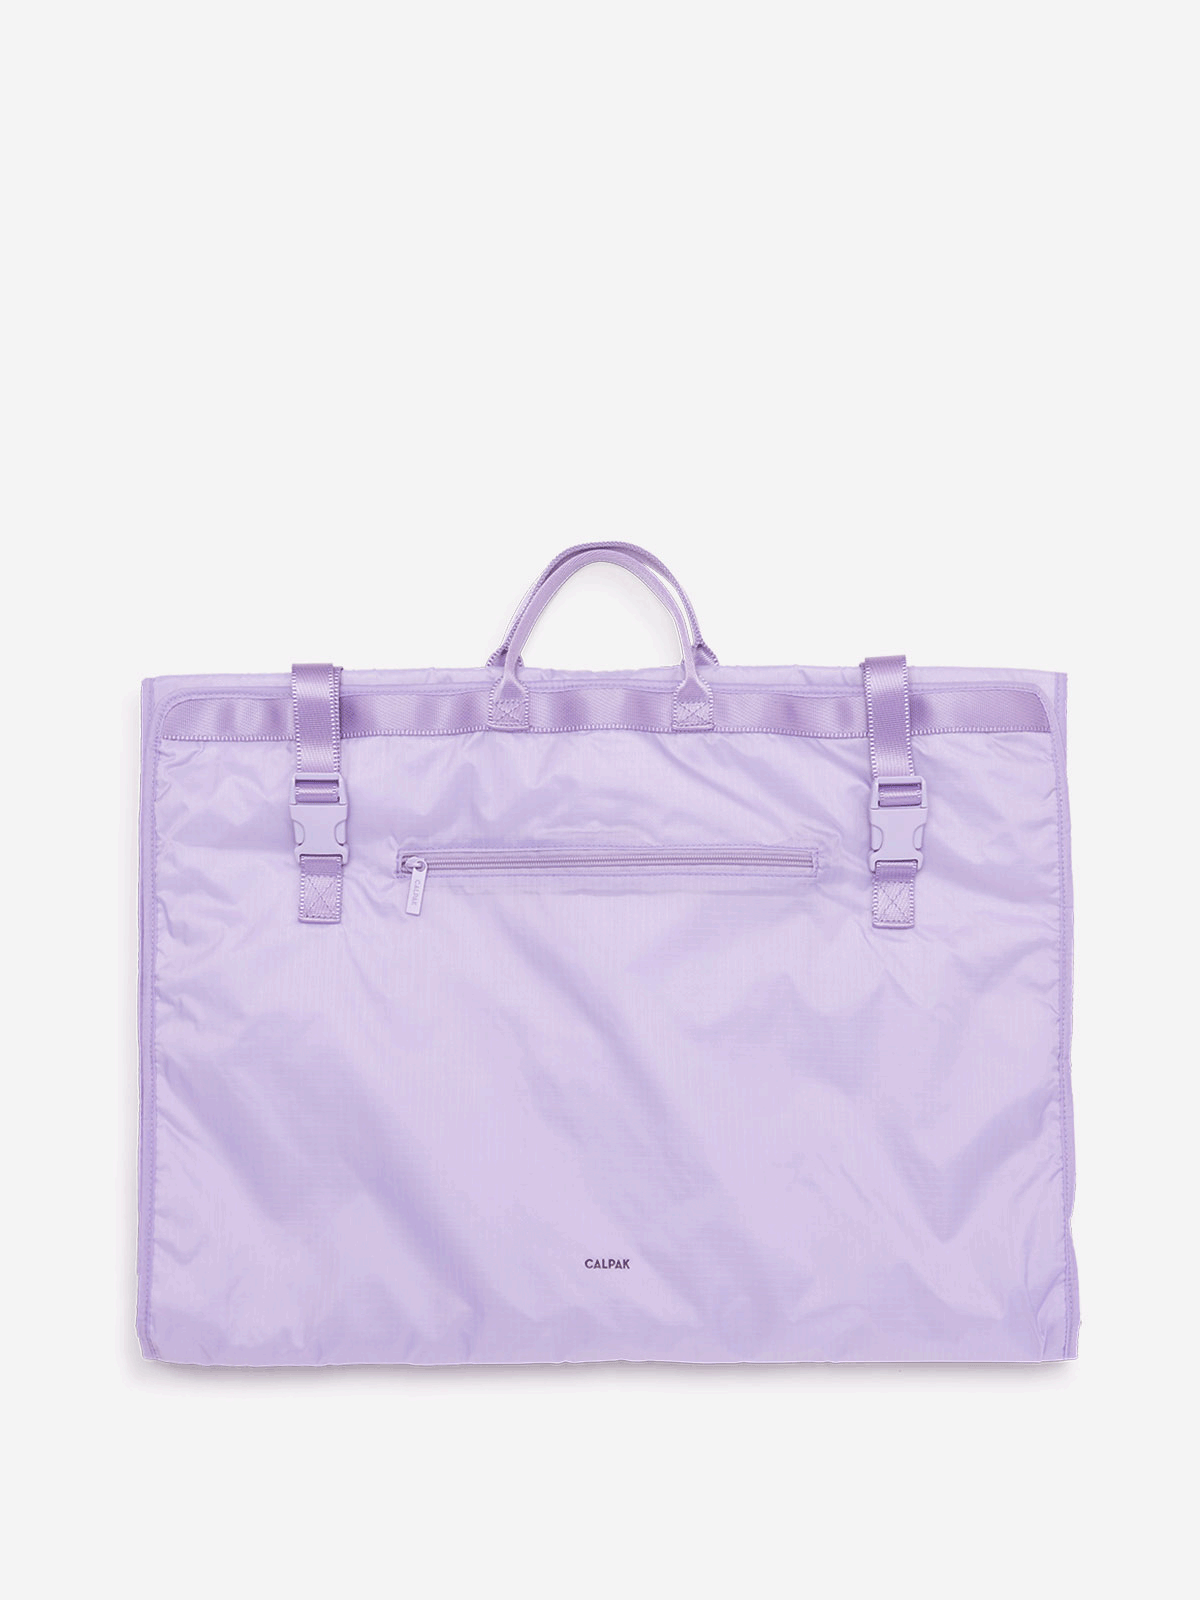 CALPAK Compakt large foldable garment bag in orchid